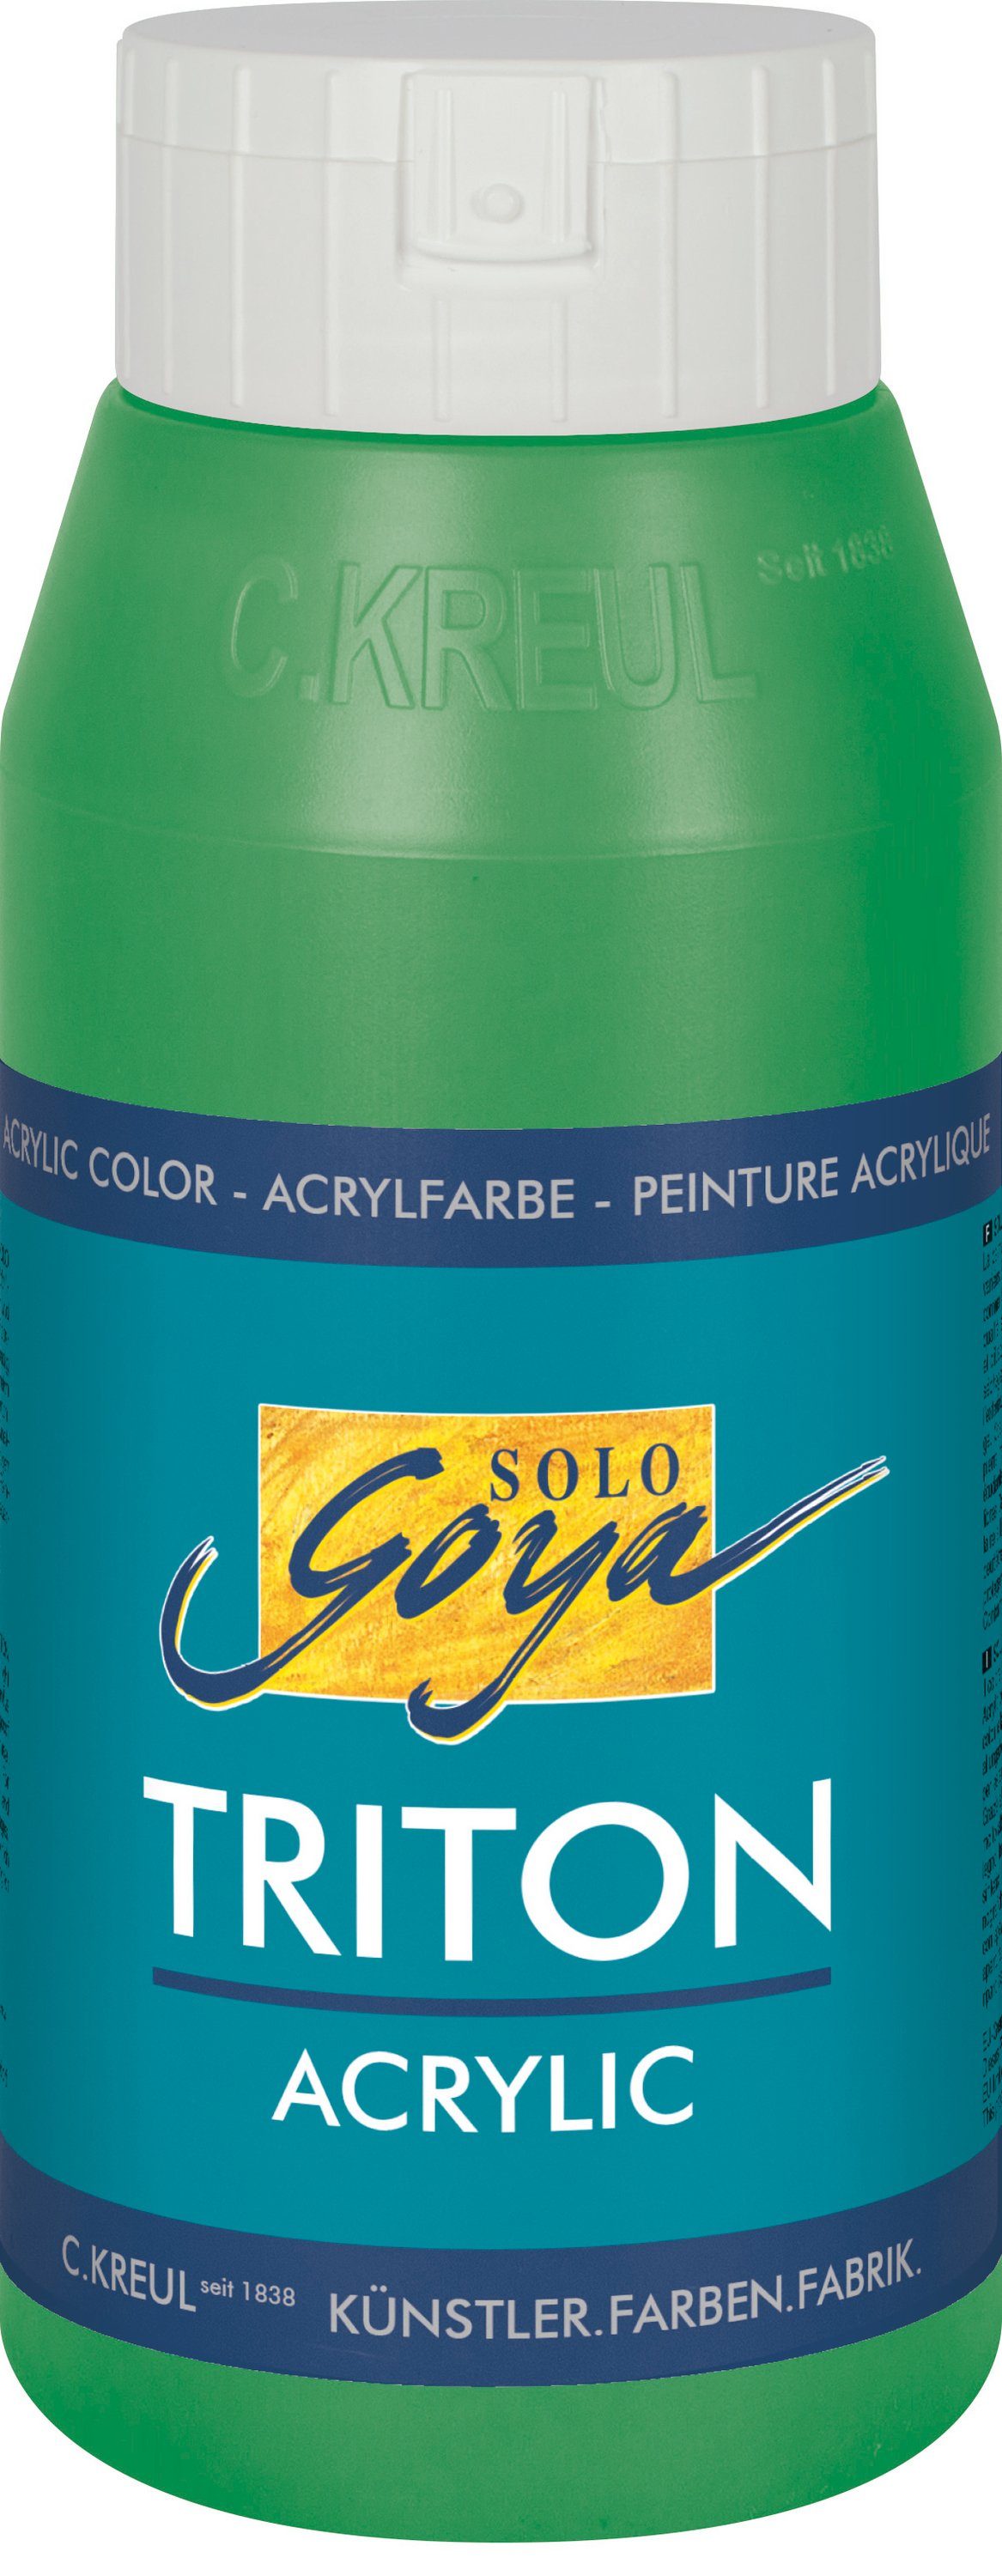 Goya Solo 750 Kreul ml Acrylic, Triton Permanent-Grün Acrylfarbe